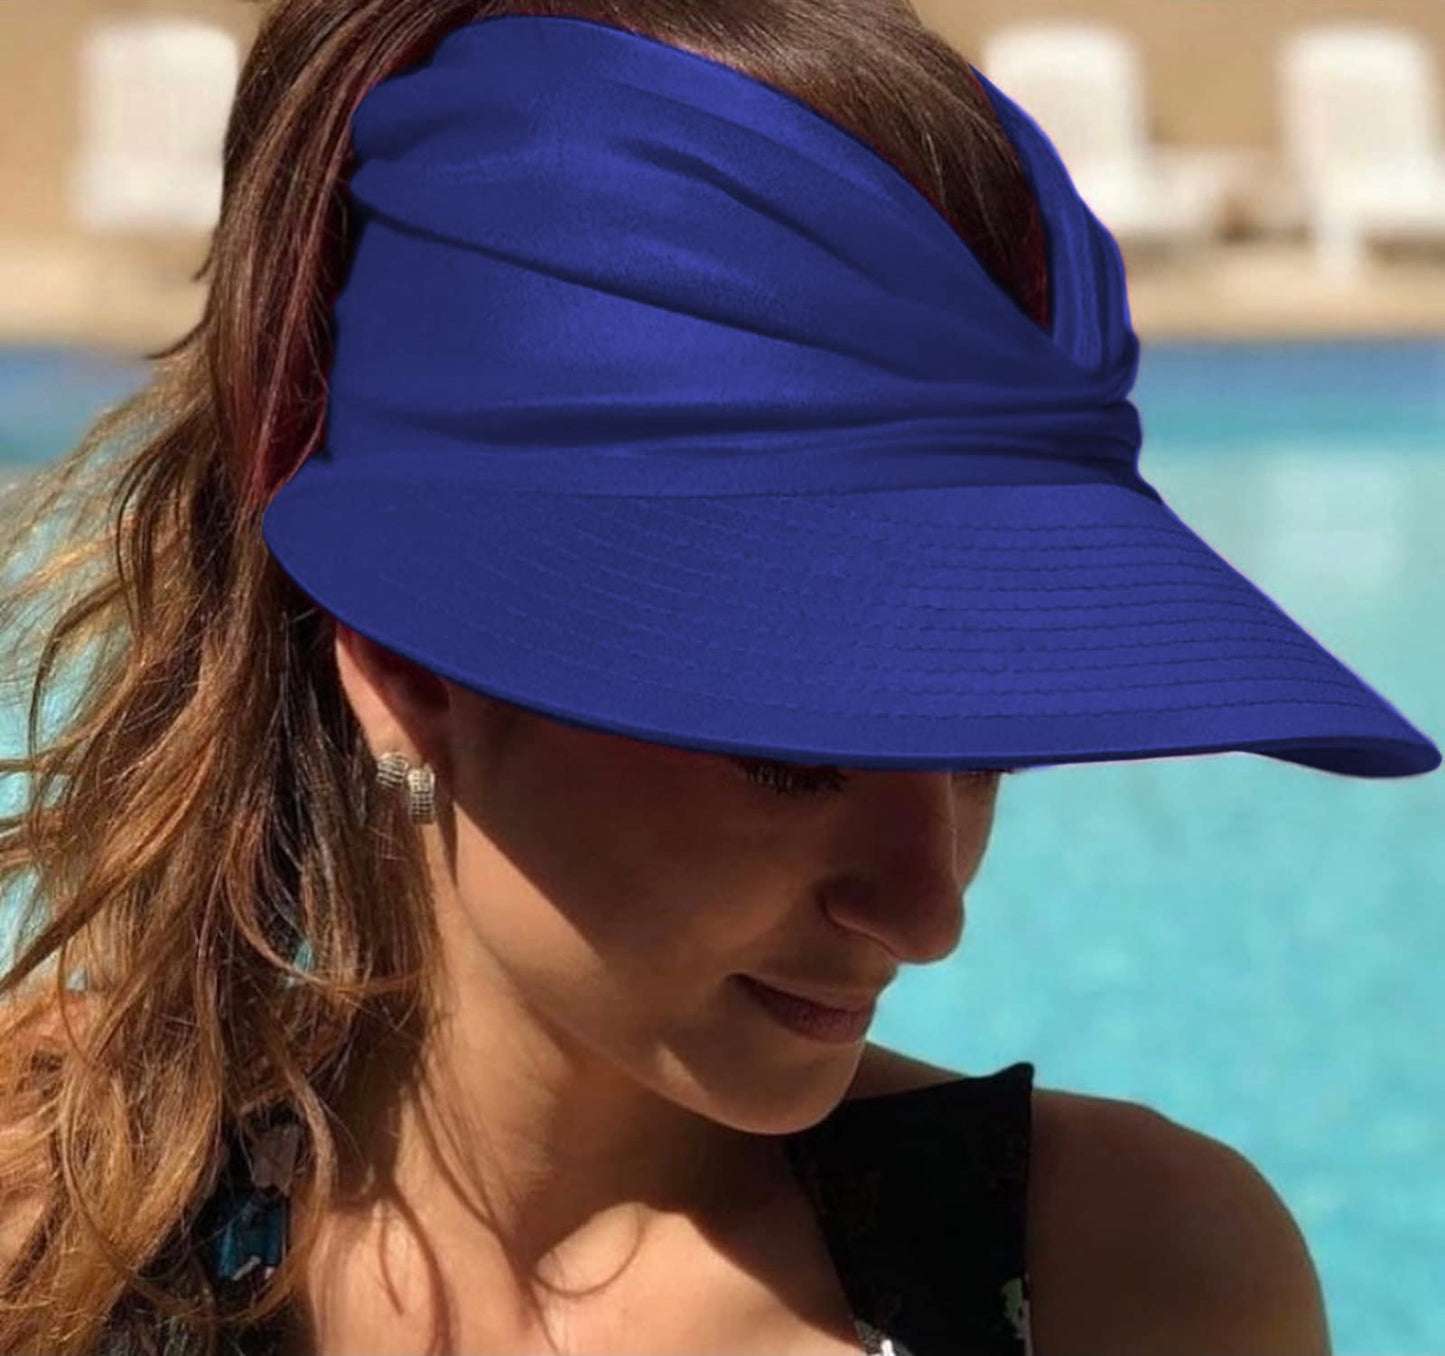 omens Sun Visor Hat Wide Brim Summer UPF 50+ UV Protection Beach Sport Cap